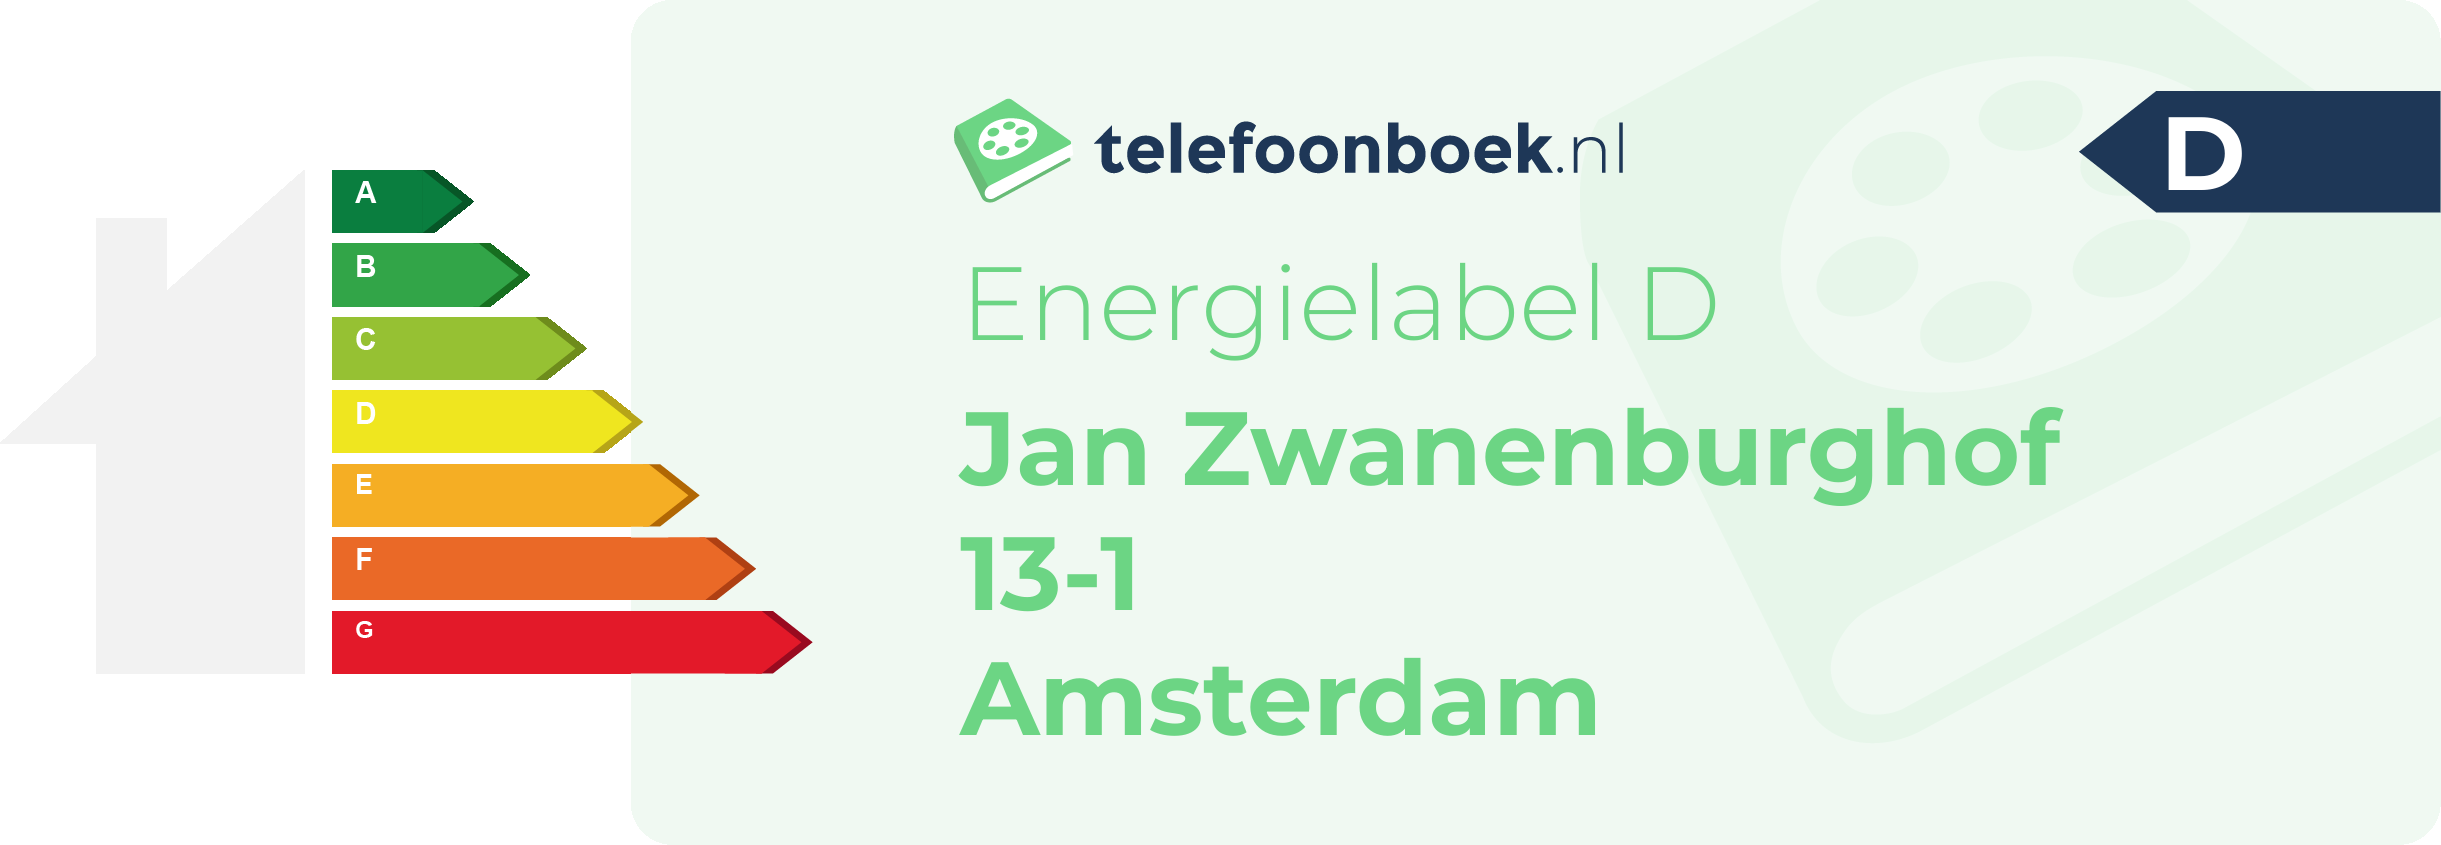 Energielabel Jan Zwanenburghof 13-1 Amsterdam